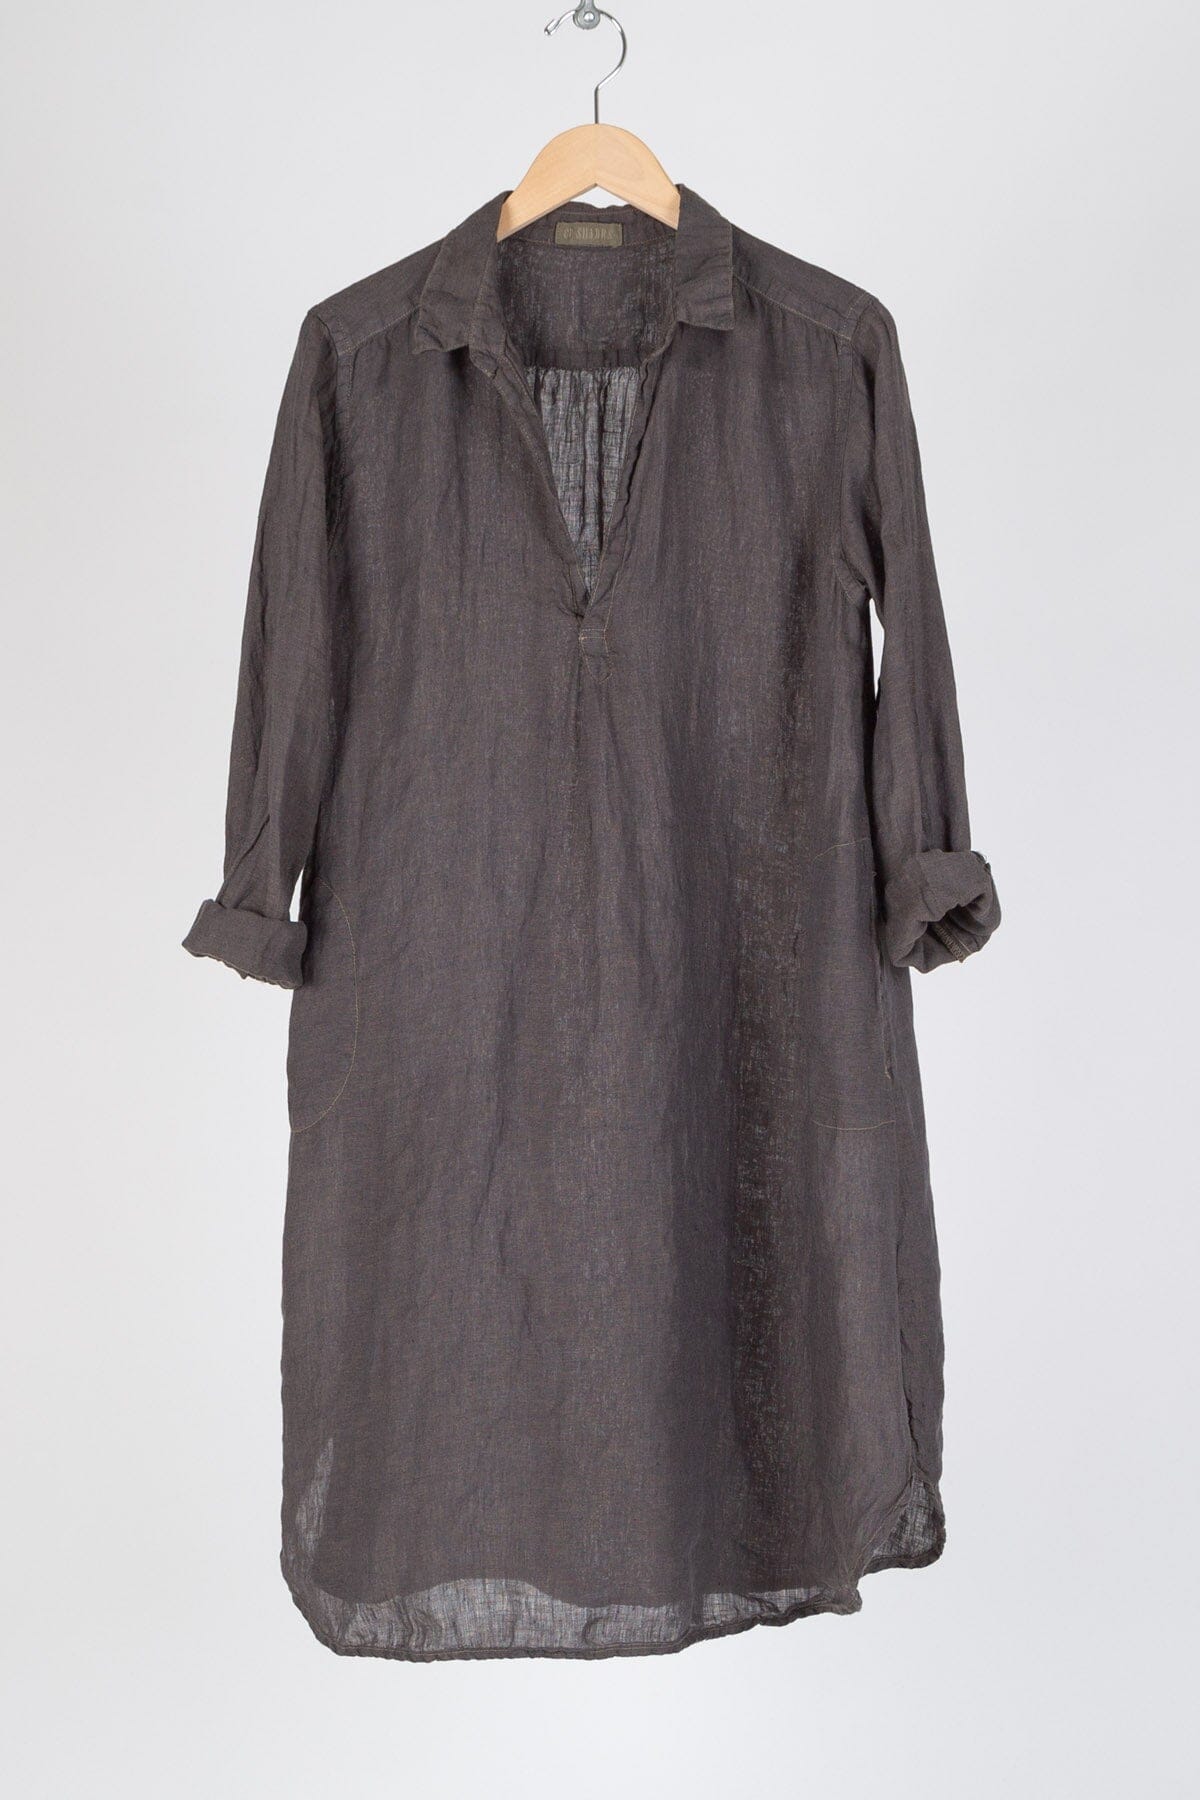 Lara - Iridescent Linen Sale S90 - Iridescent Sale Dresses/Skirts CP Shades oliveto 162